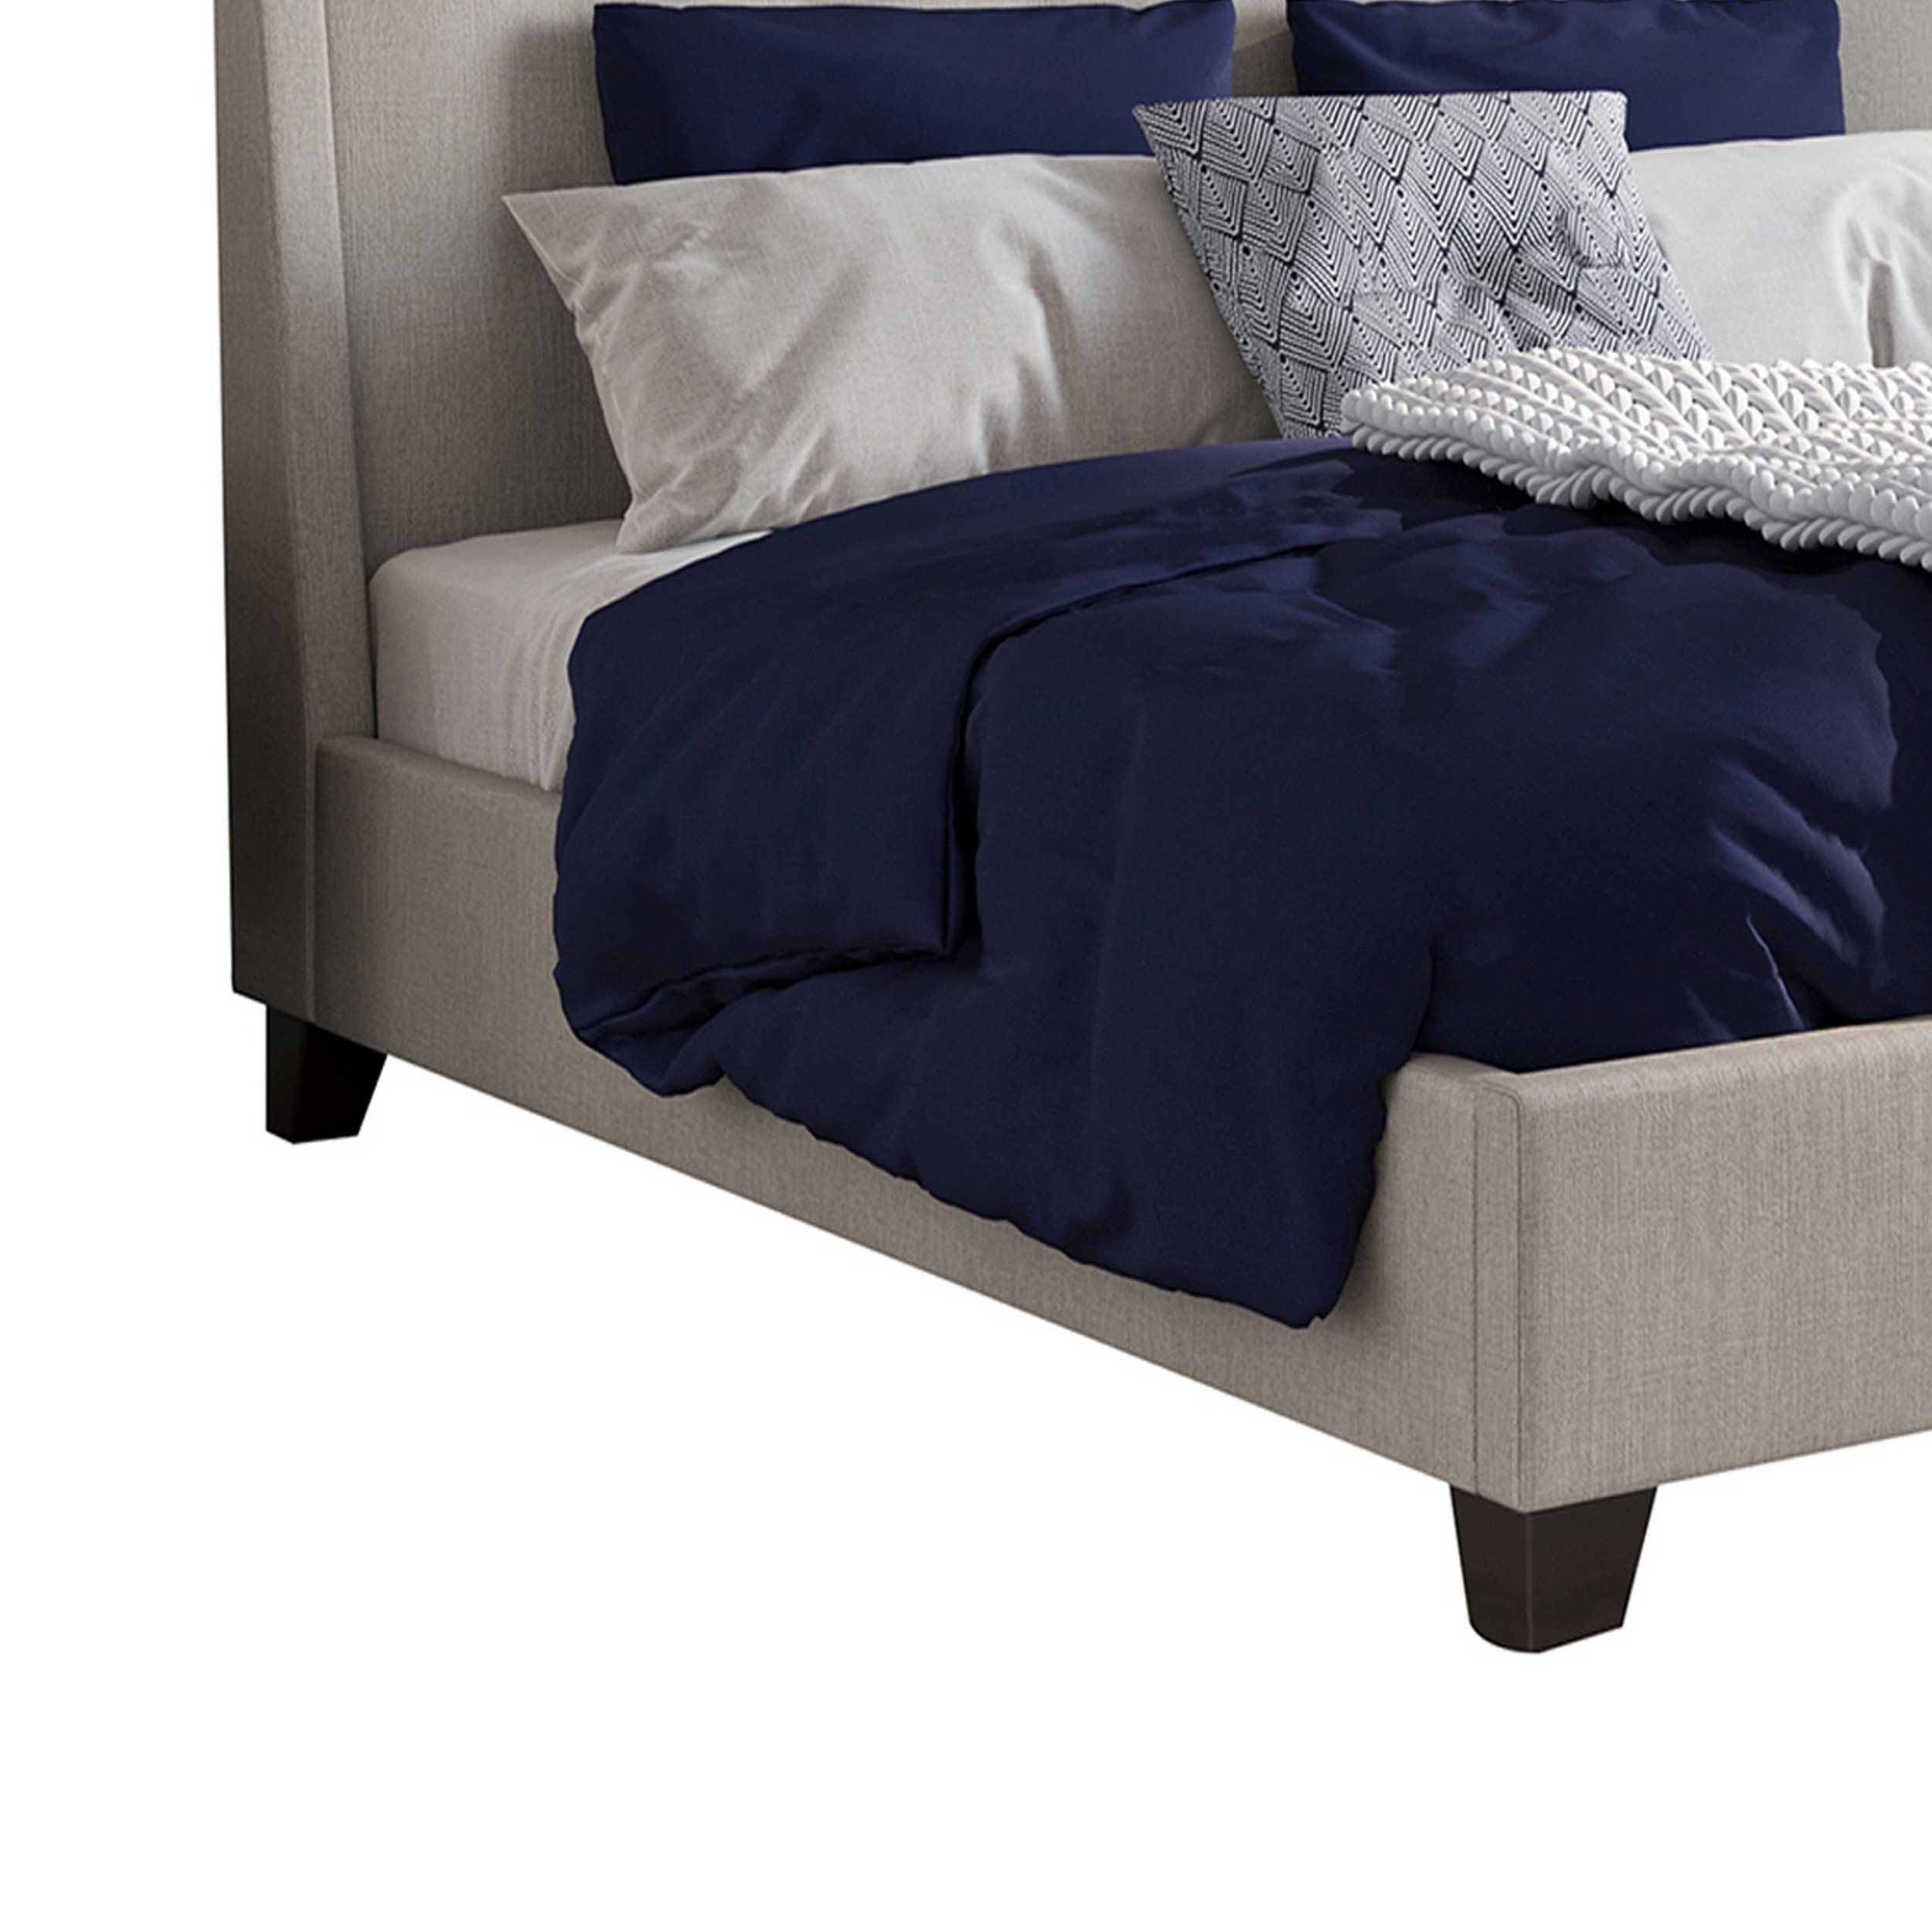 Atina Full Size Platform Bed, Soft Button Tufted Beige Linen Upholstery- Saltoro Sherpi